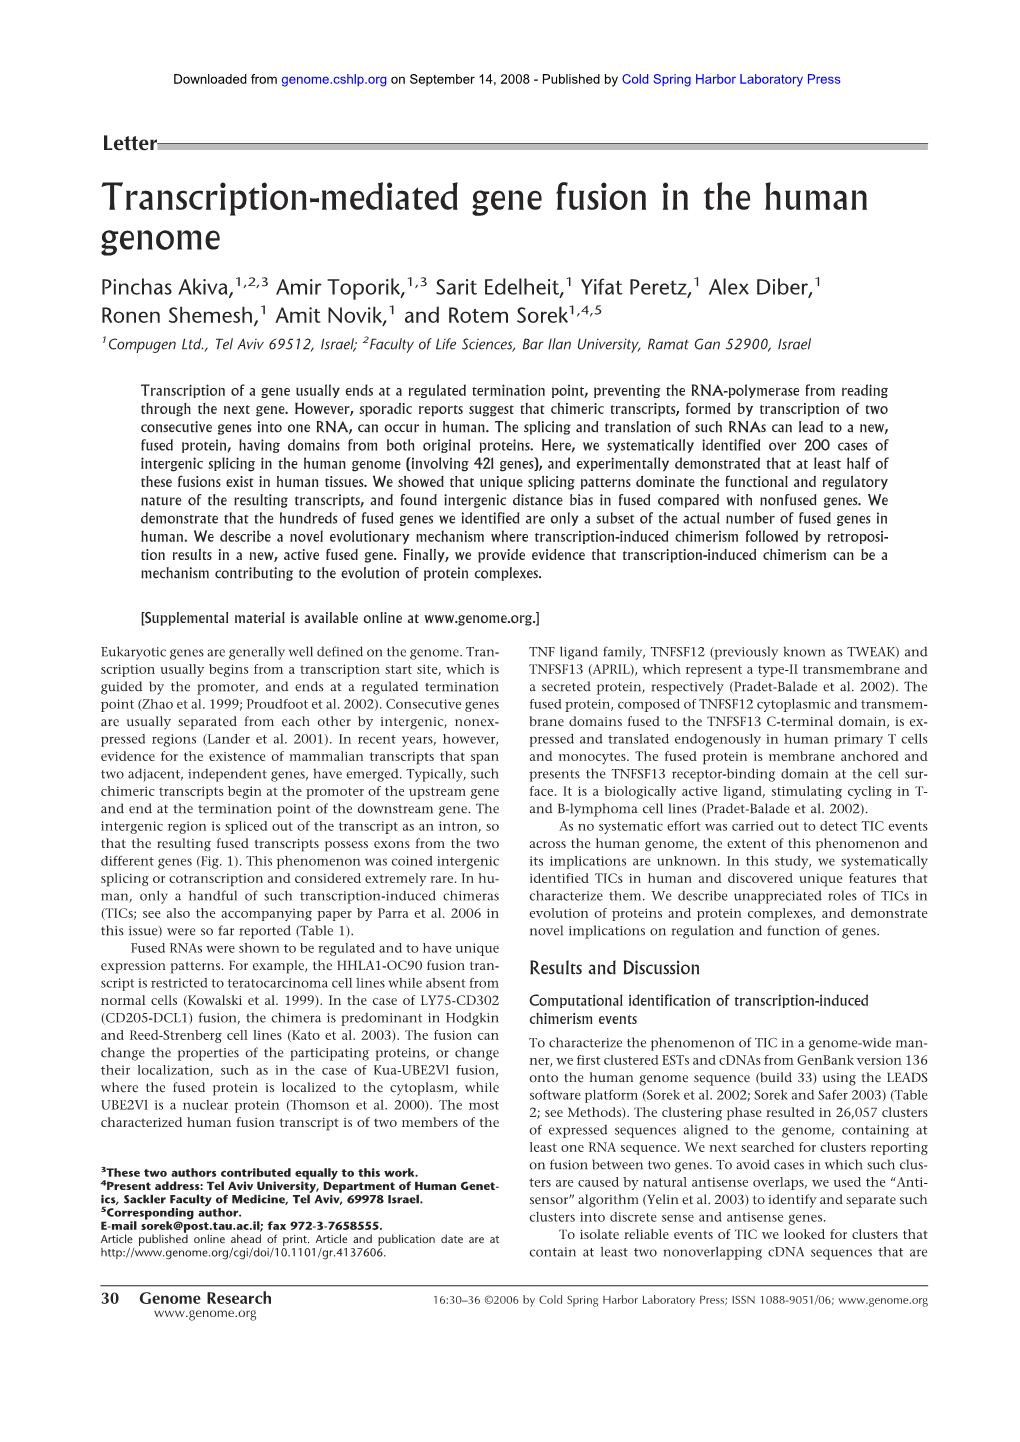 Transcription-Mediated Gene Fusion in the Human Genome